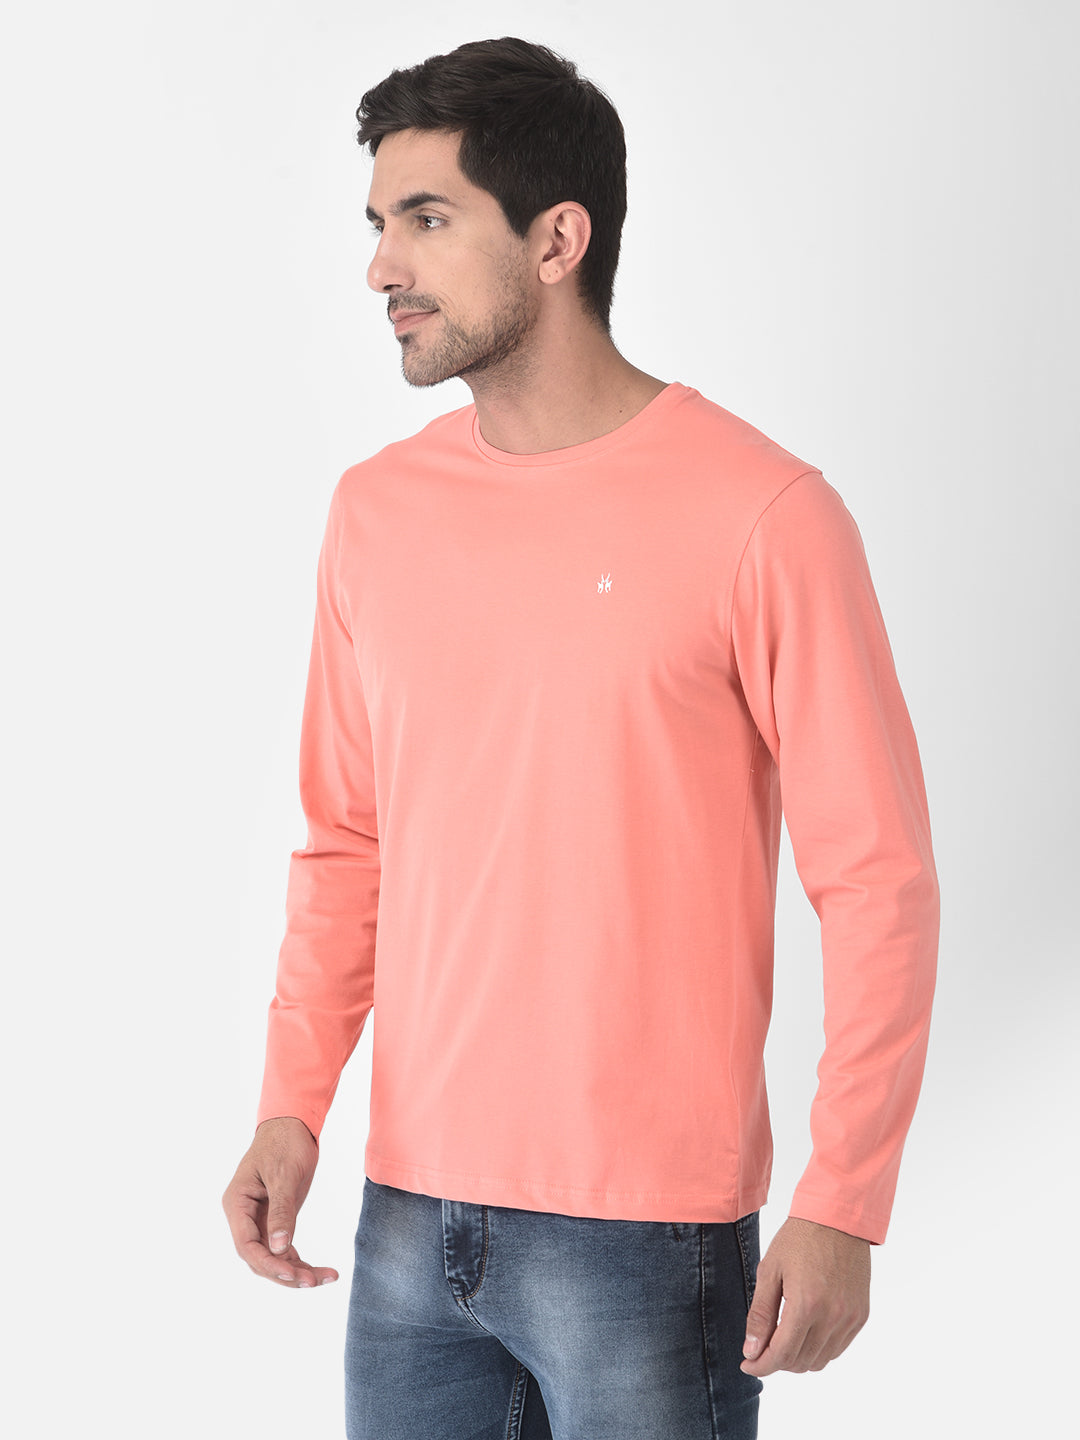 Pink Long-Sleeve T-Shirt - Men T-Shirts